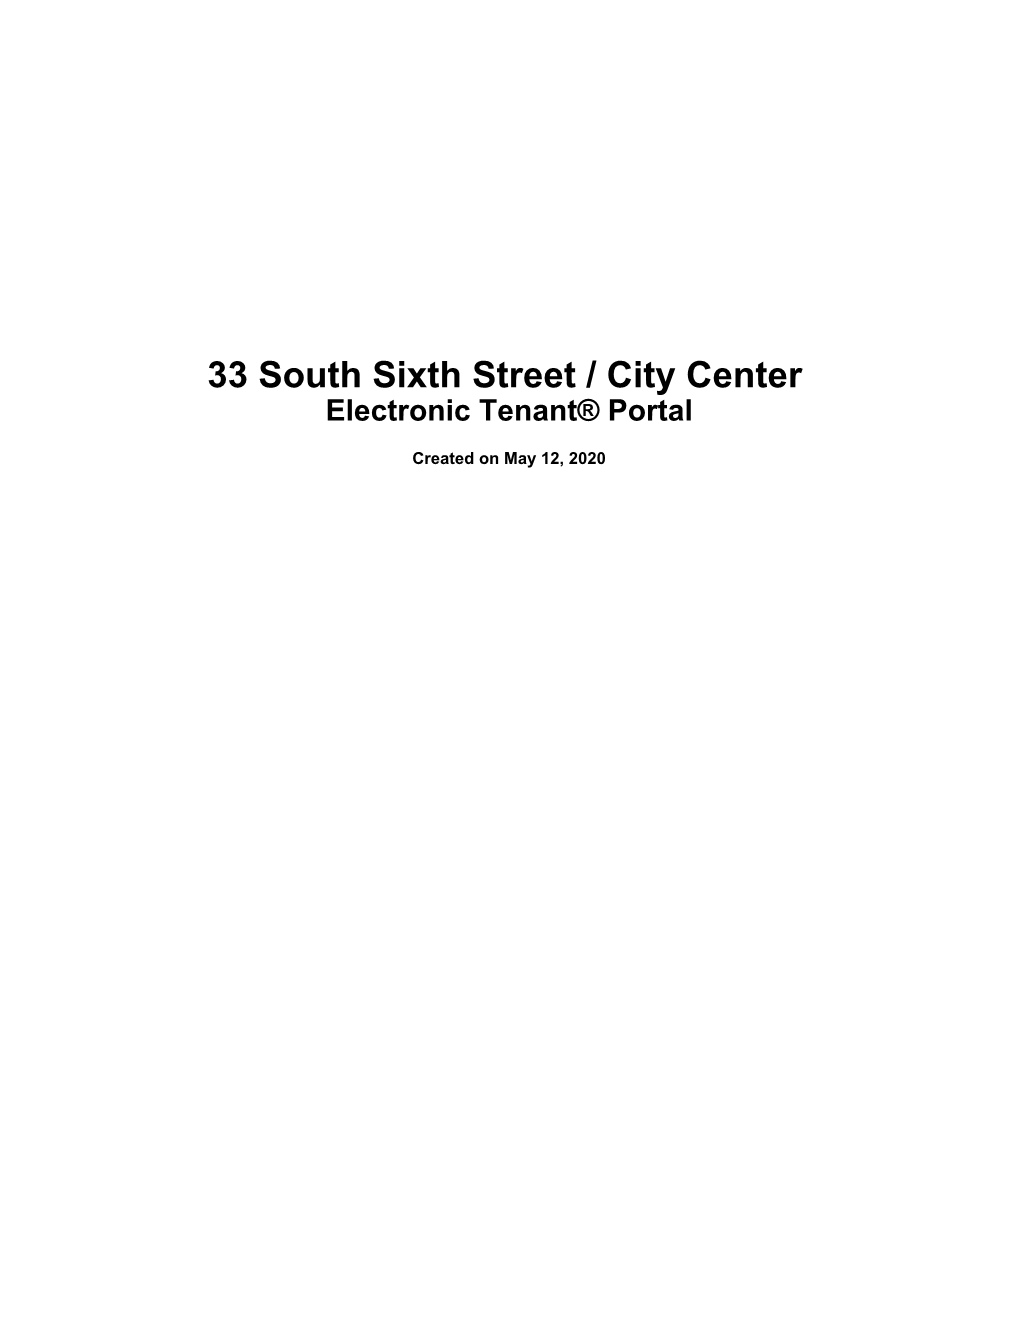 33 South Sixth Street / City Center's Tenant® Portal